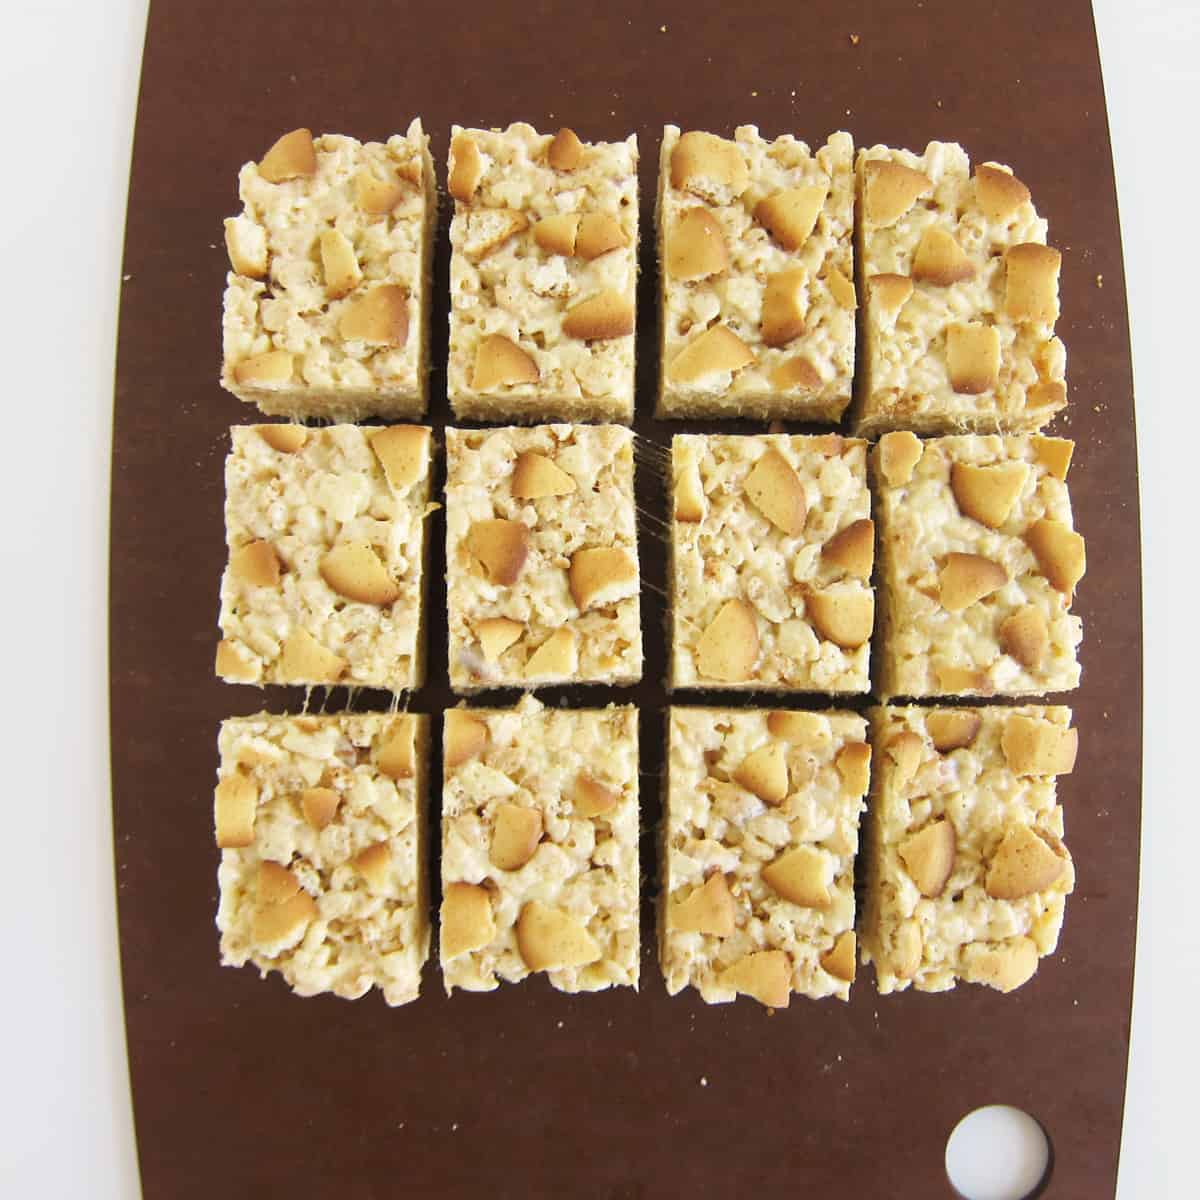 banana rice krispie treats cut into rectangles